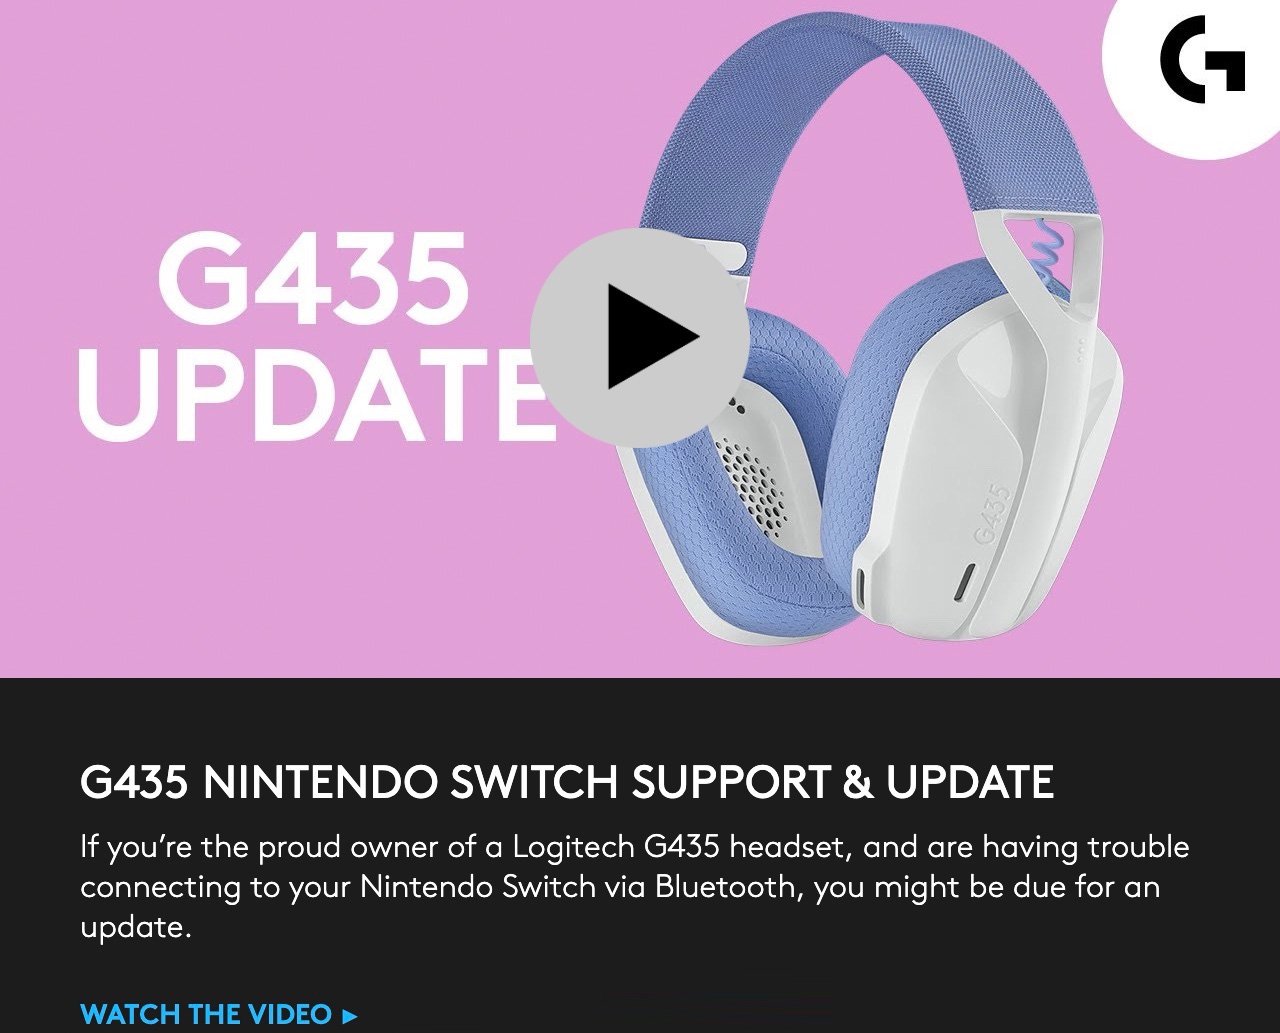 G435 Nintendo Switch